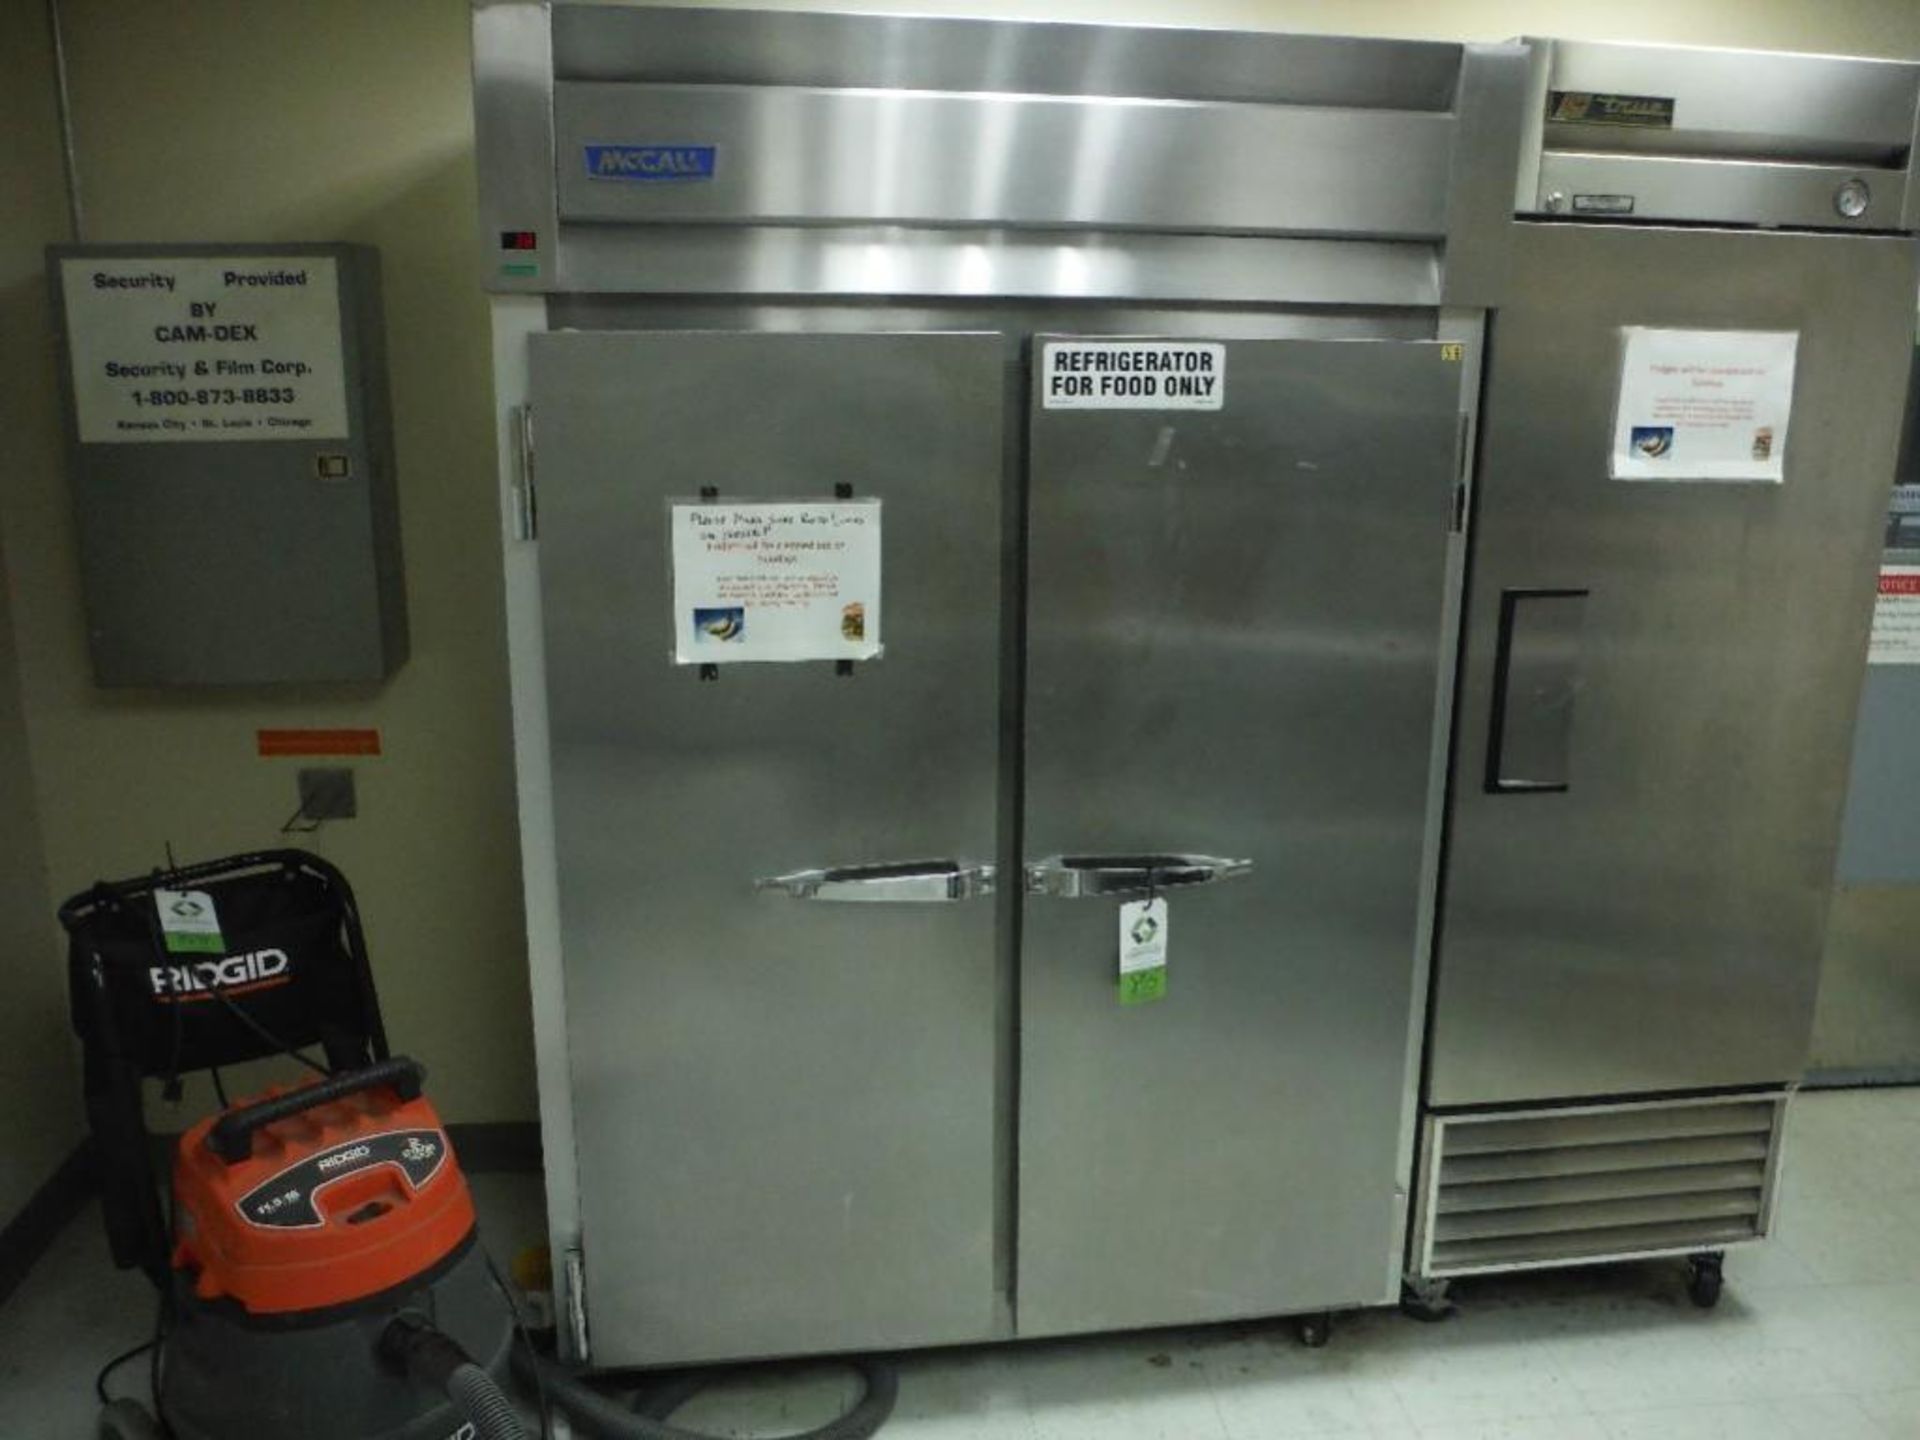 McCall 2 door fridge, Model 4-4045. - RIGGING FEE FOR DOMESTIC TRANSPORT $300